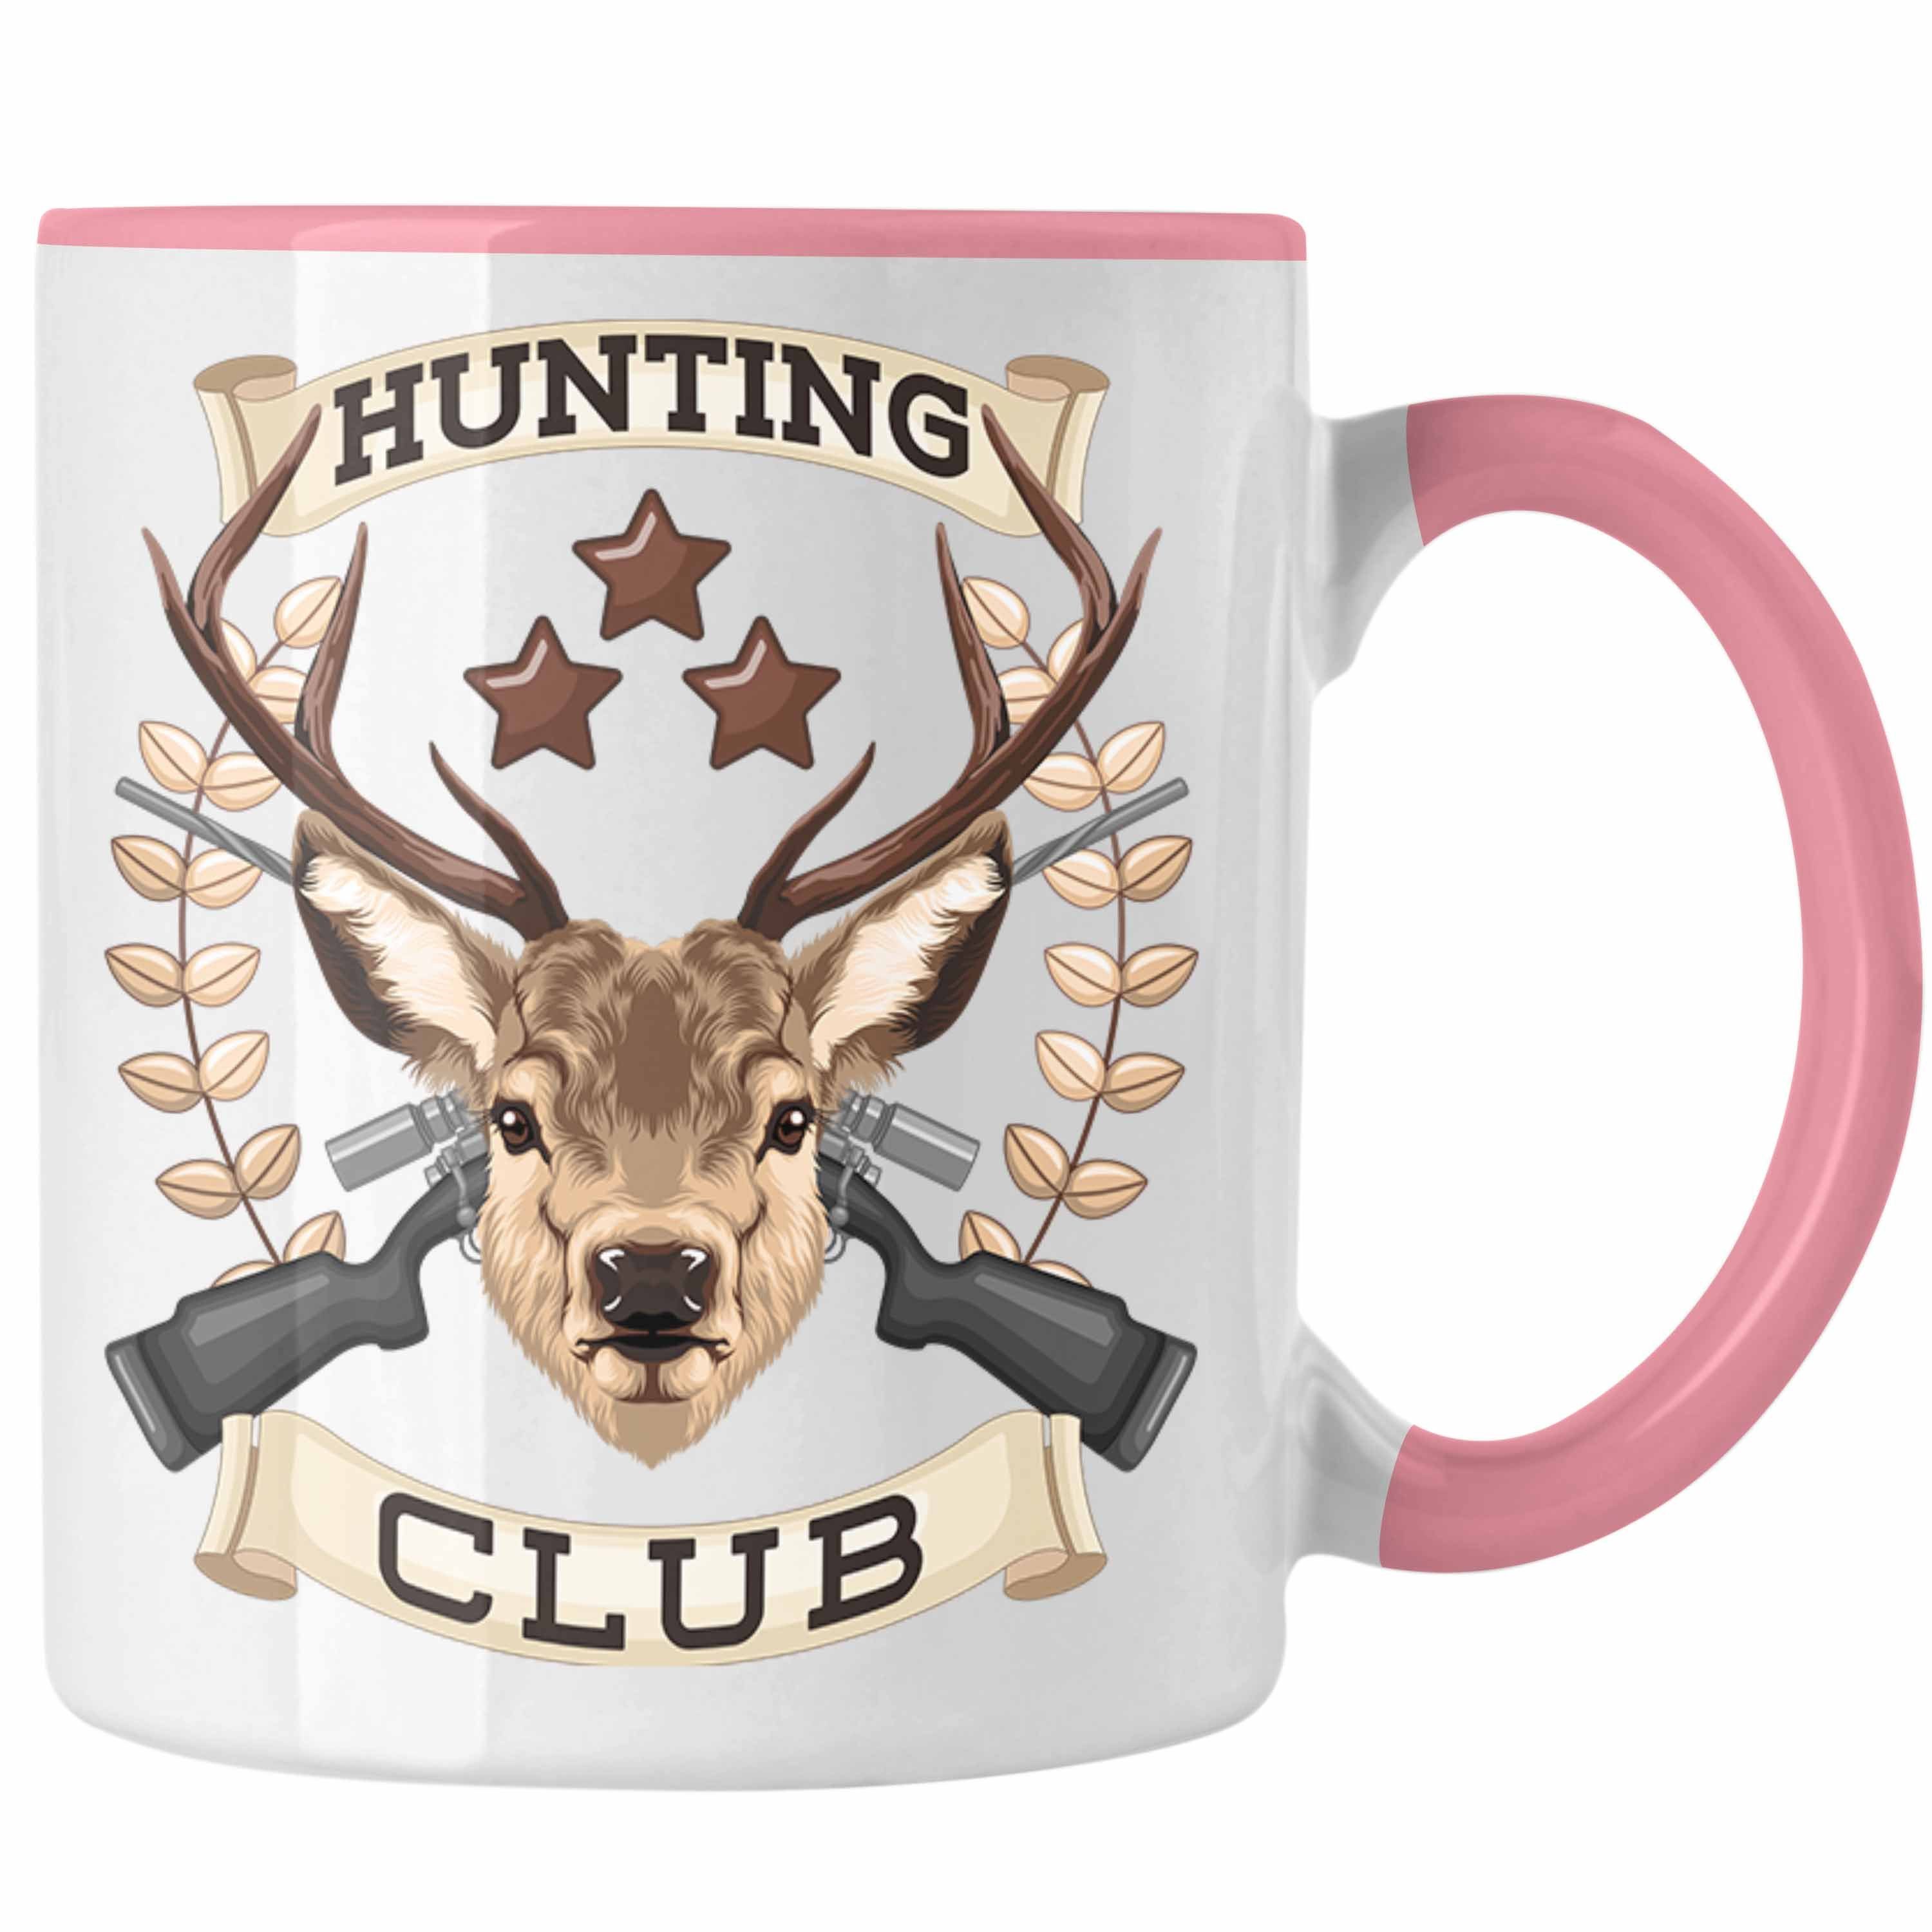 Trendation Tasse Jäger Hunting Club Tasse Geschenk für Jäger Becher Männer Spruch Jagd Rosa